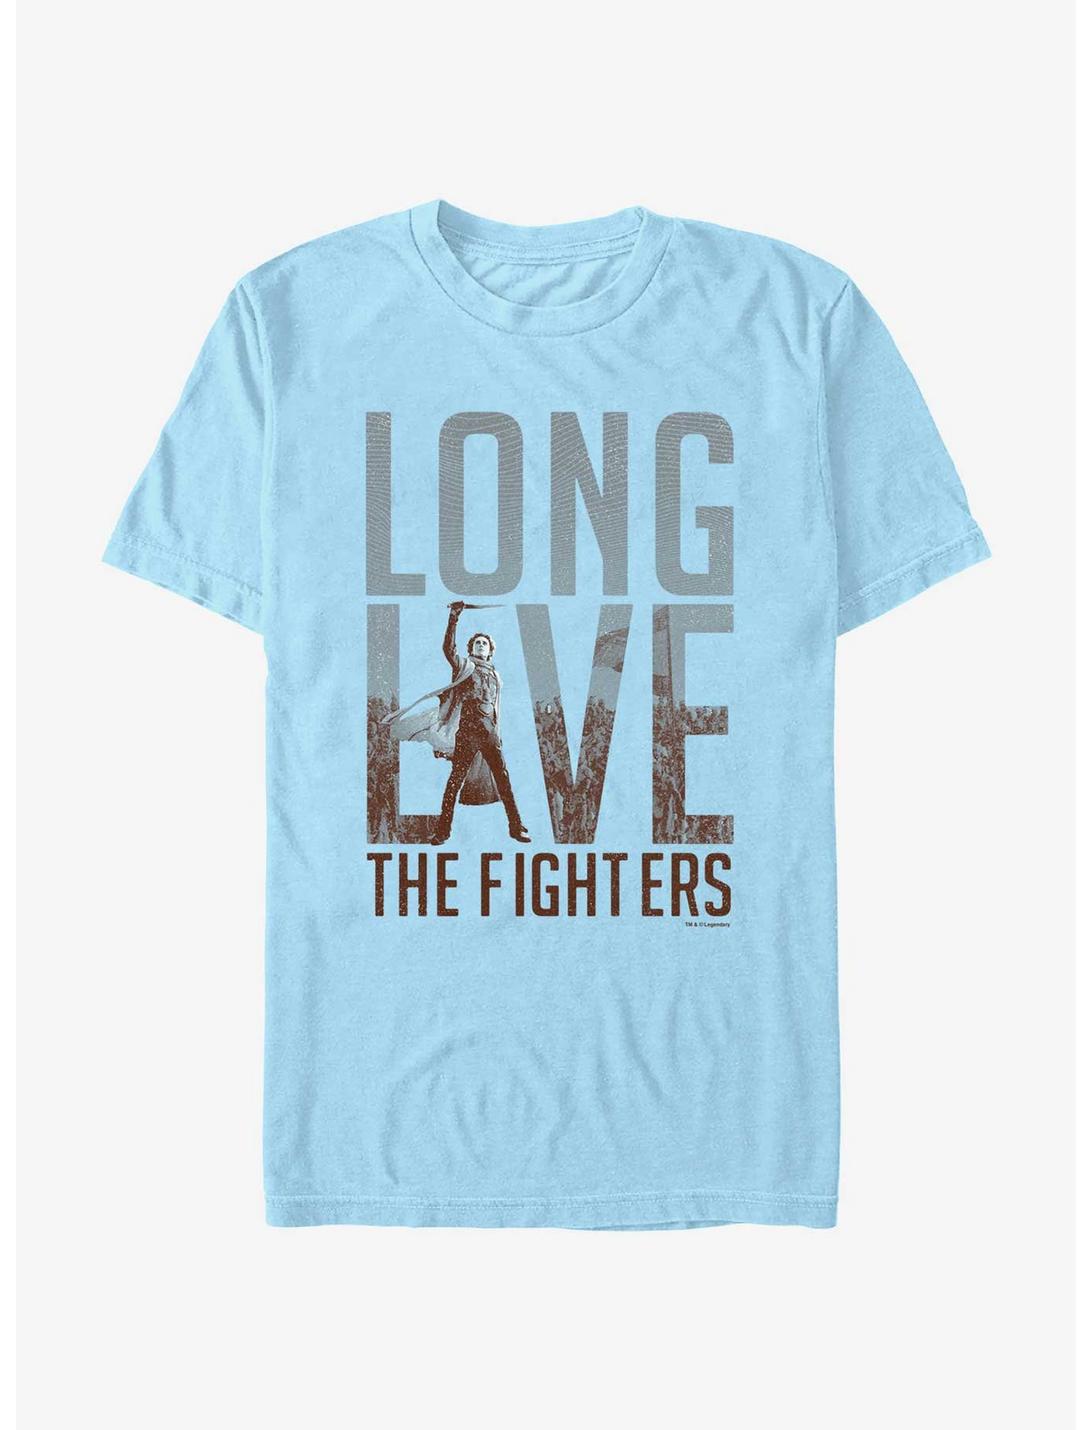 Dune Long Live The Fighters Paul T-Shirt, LT BLUE, hi-res